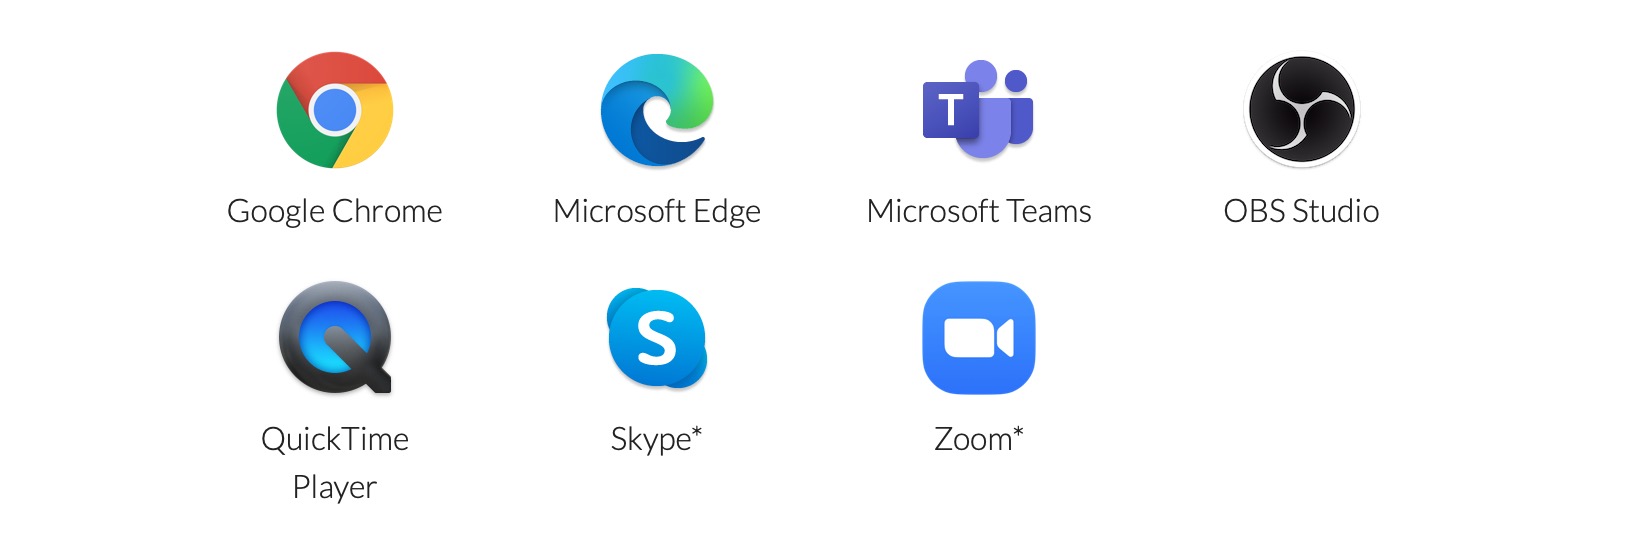 Zoom,Skype,Teams,OBS Studioなどに対応している模様